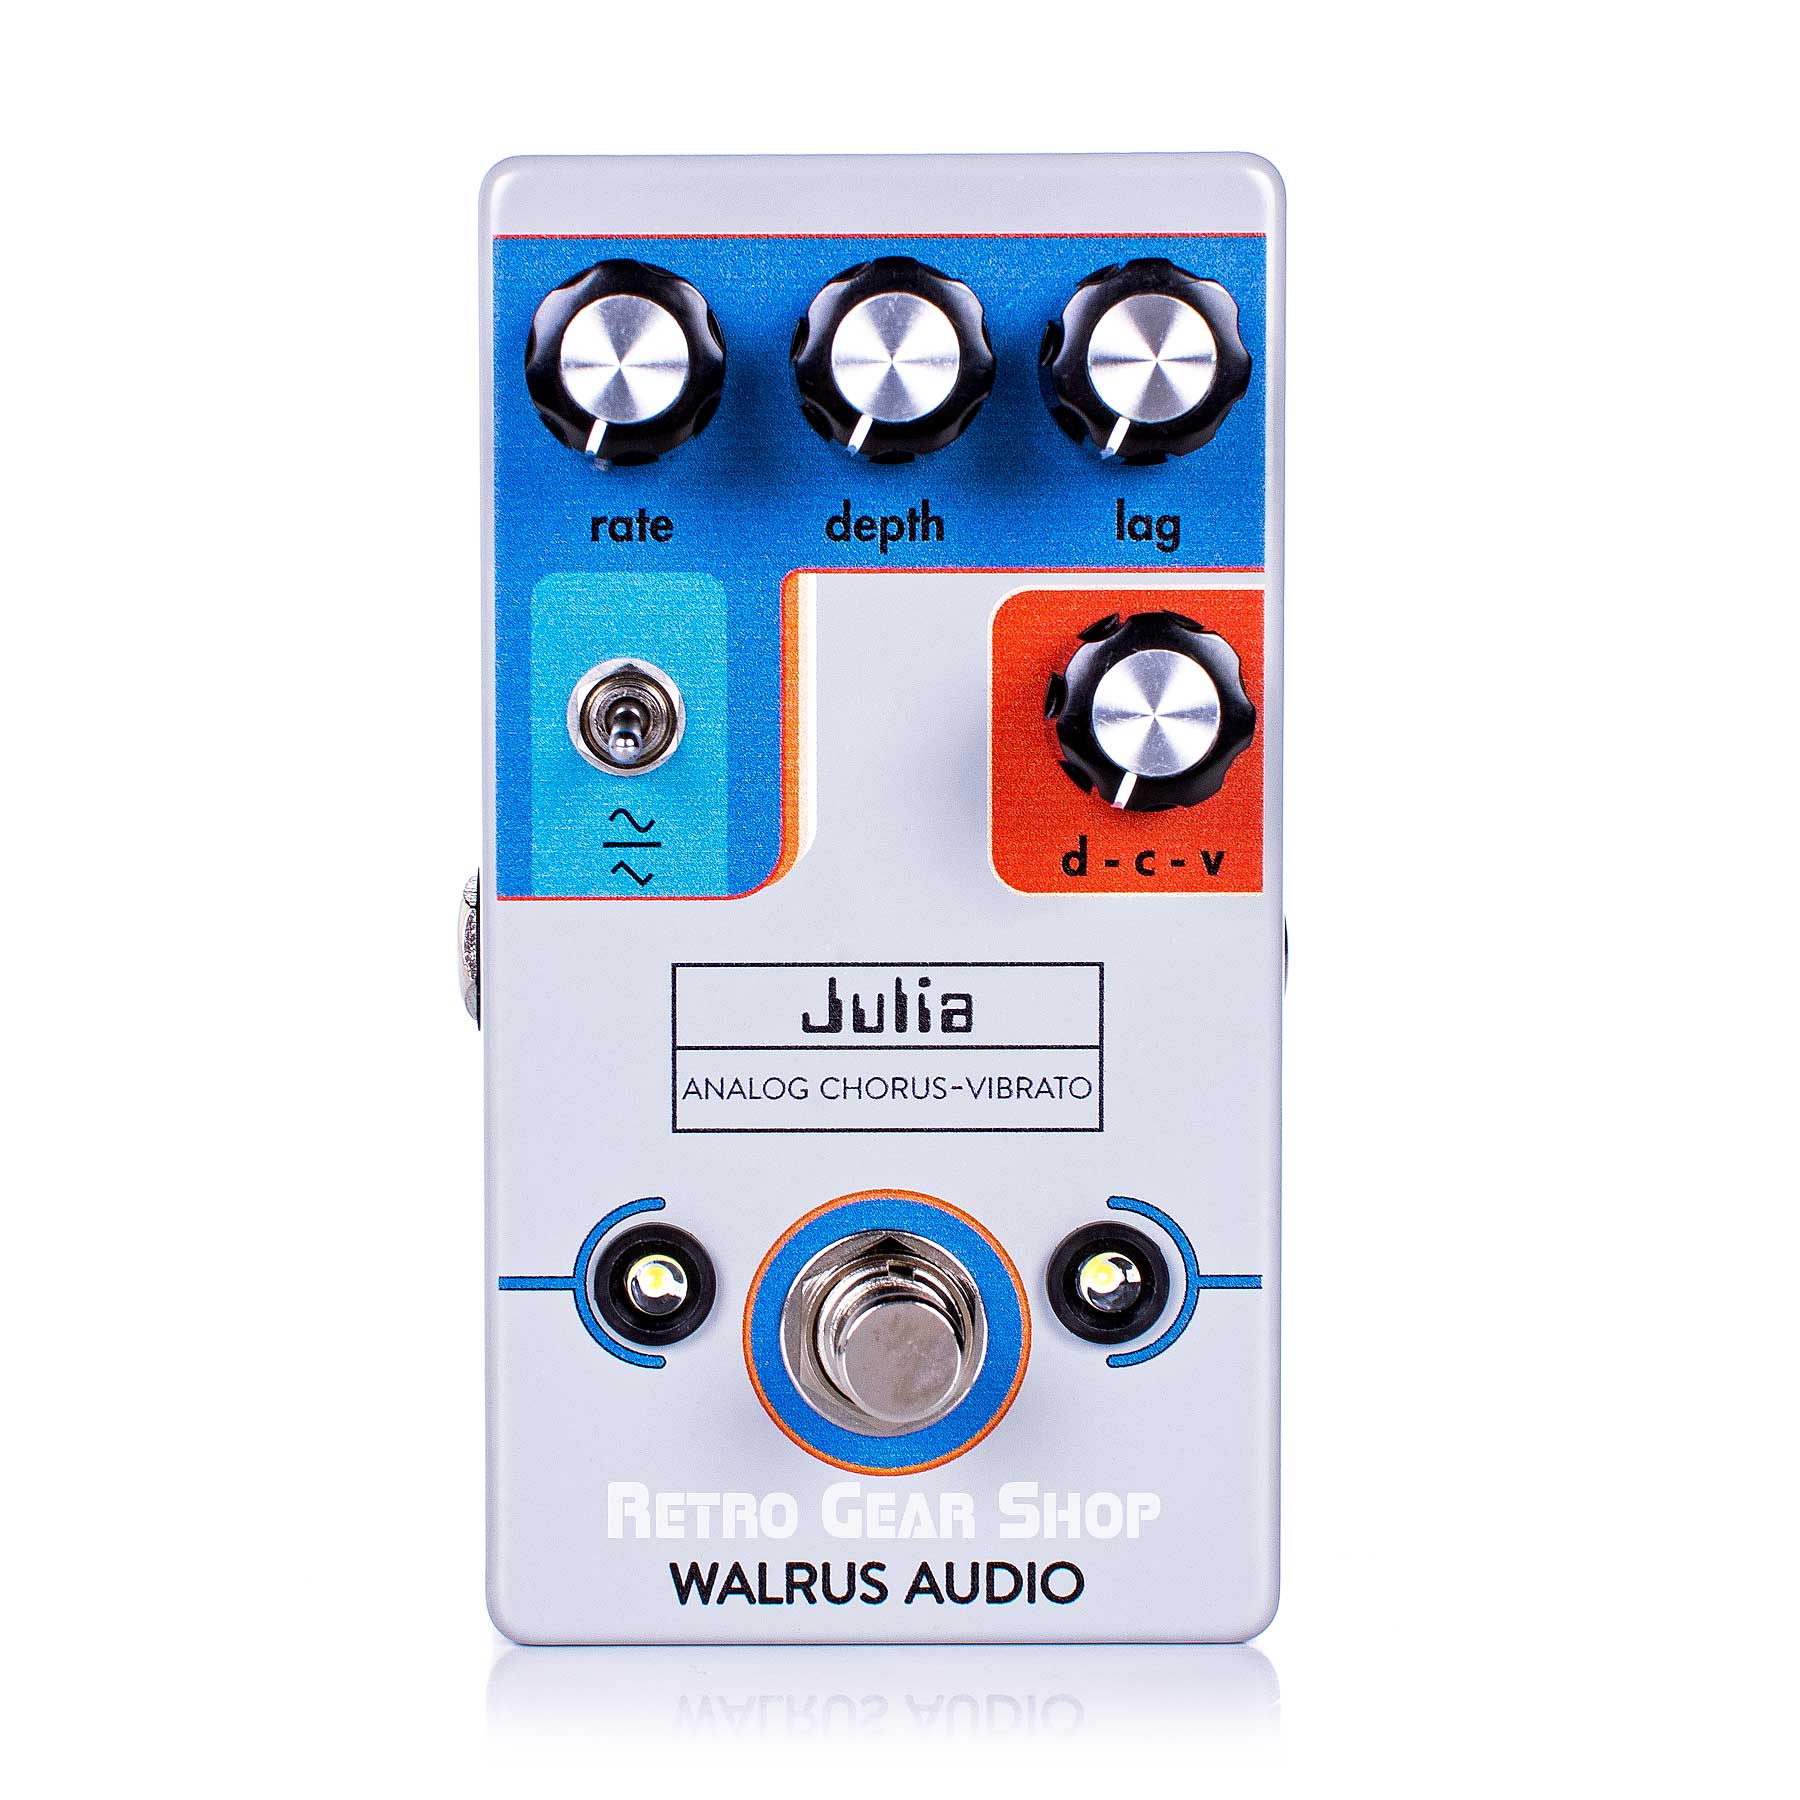 Walrus Audio Julia Analog Chorus/Vibrato Custom Retro Limited